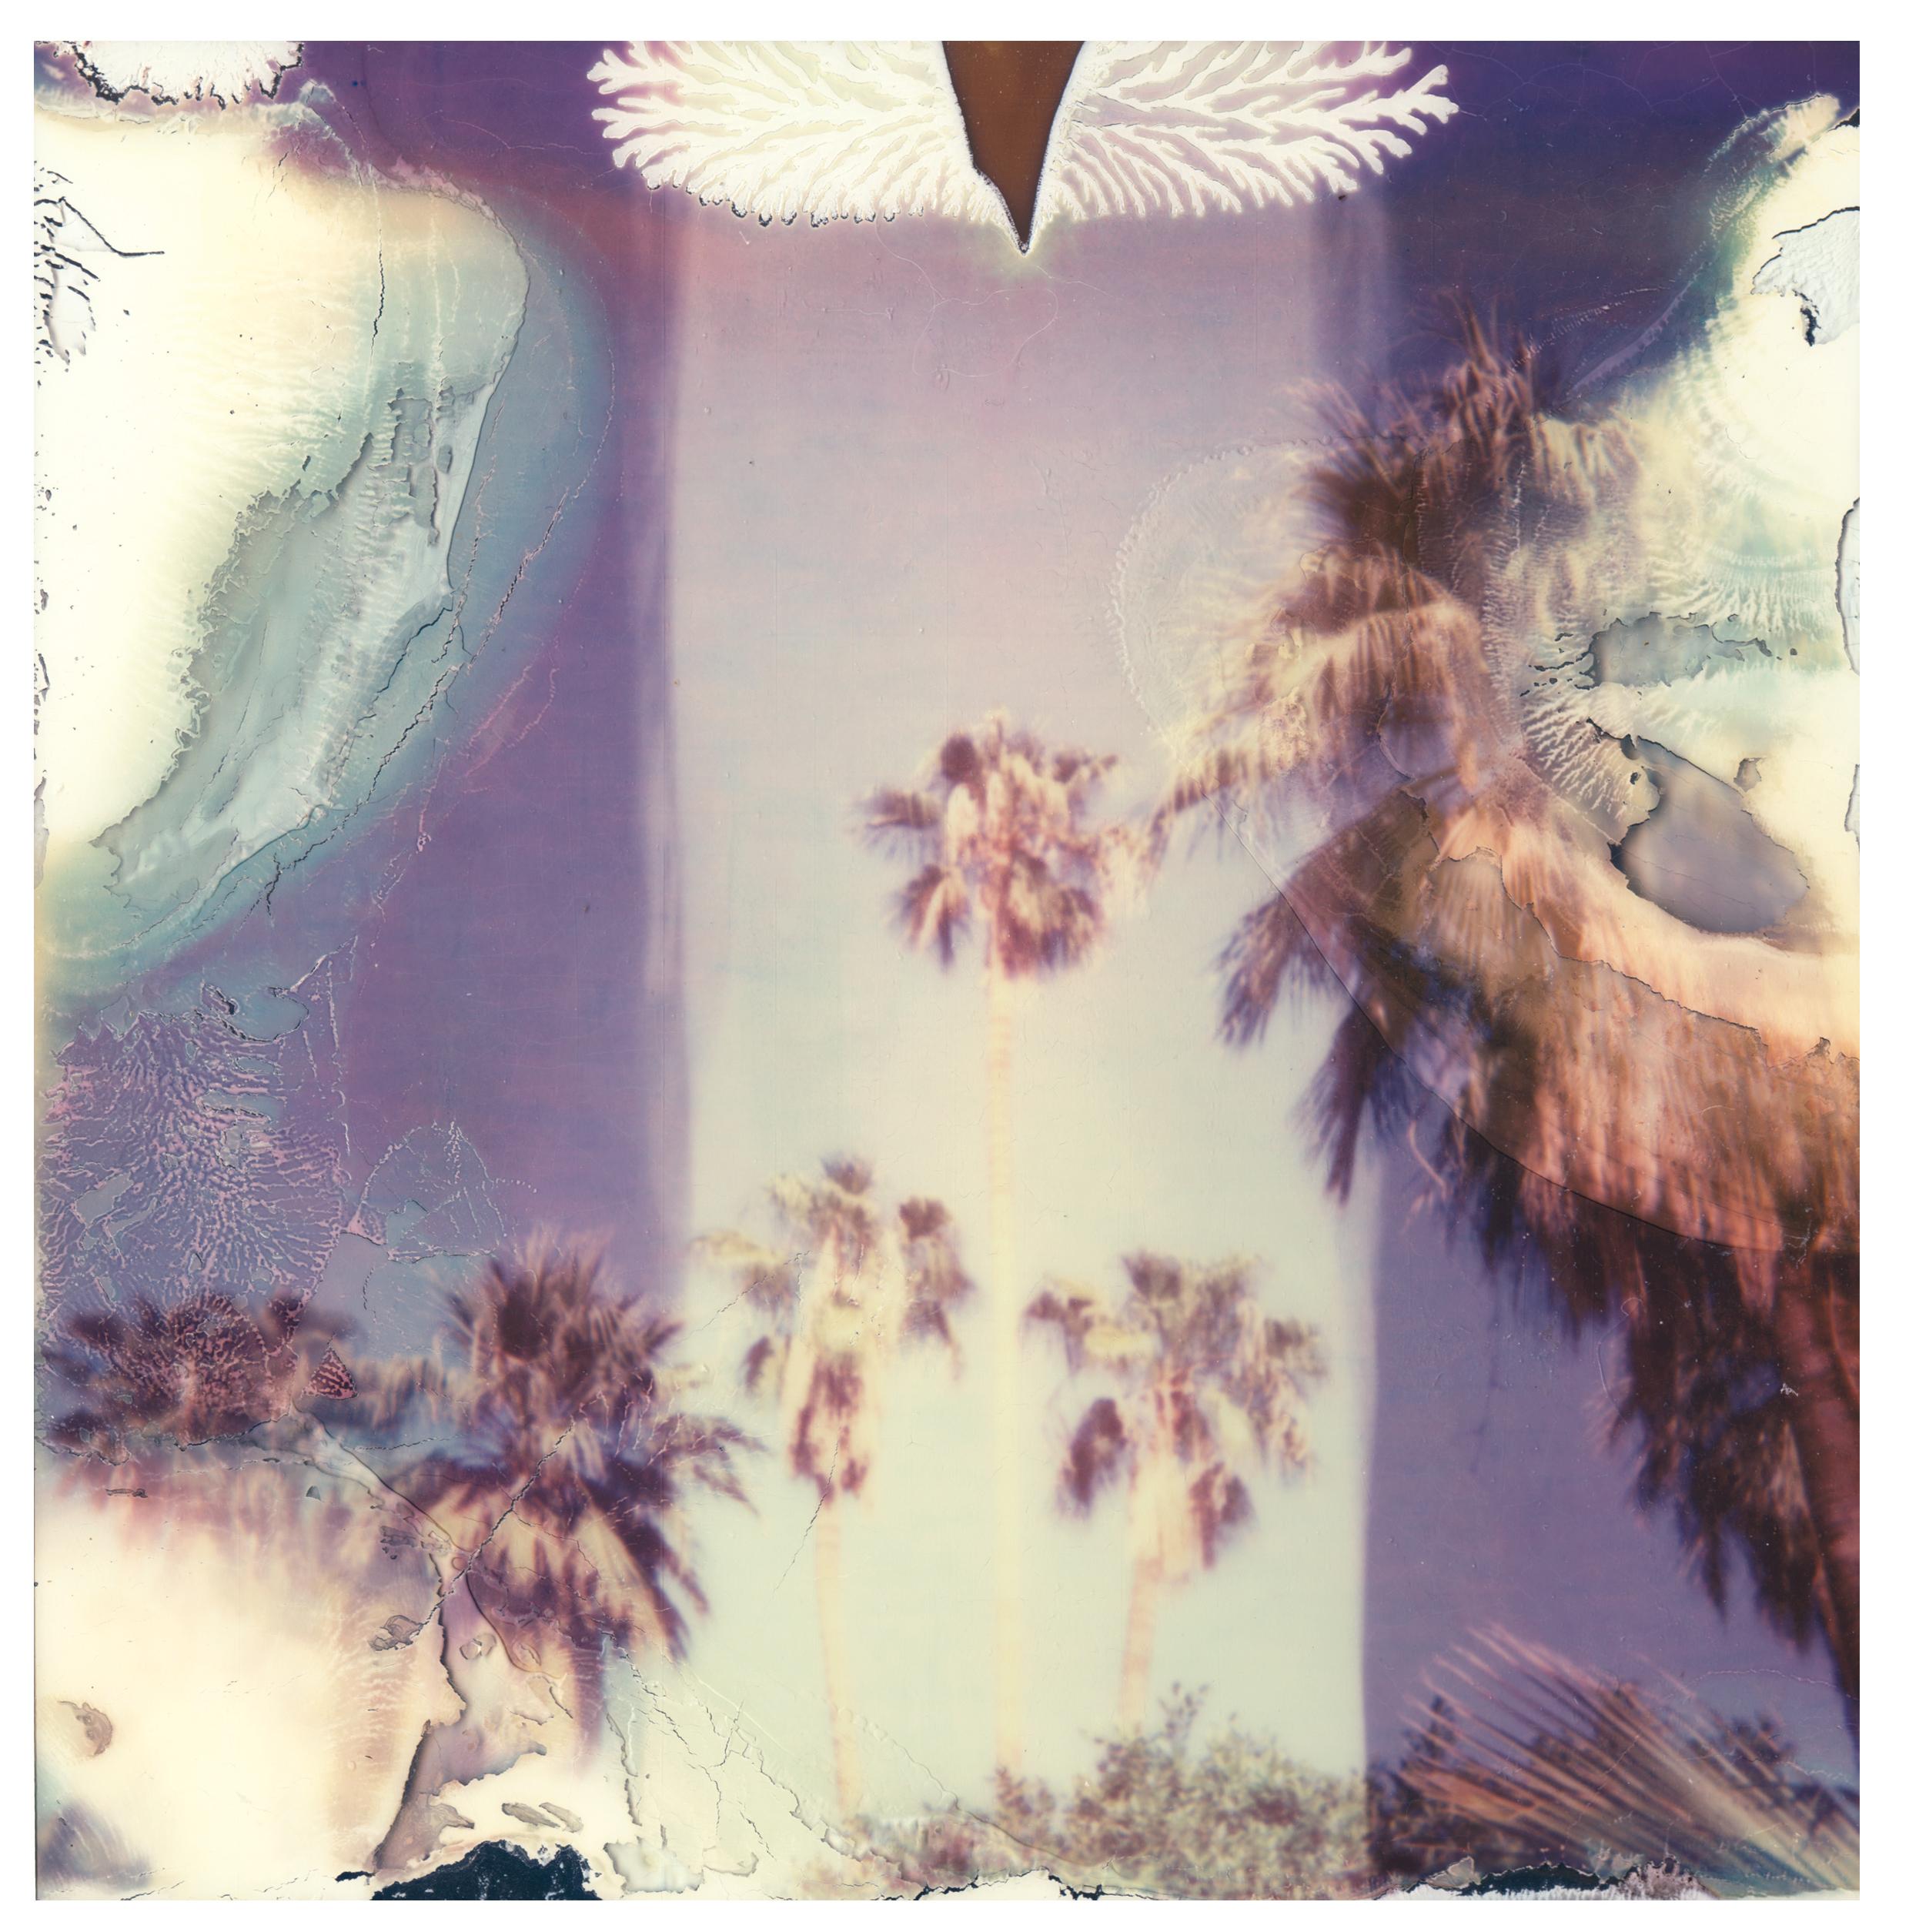 Color Photograph Stefanie Schneider - Jimi Hendrix Palm Trees - Contemporain, Paysage, Polaroid, Photographie, Expired